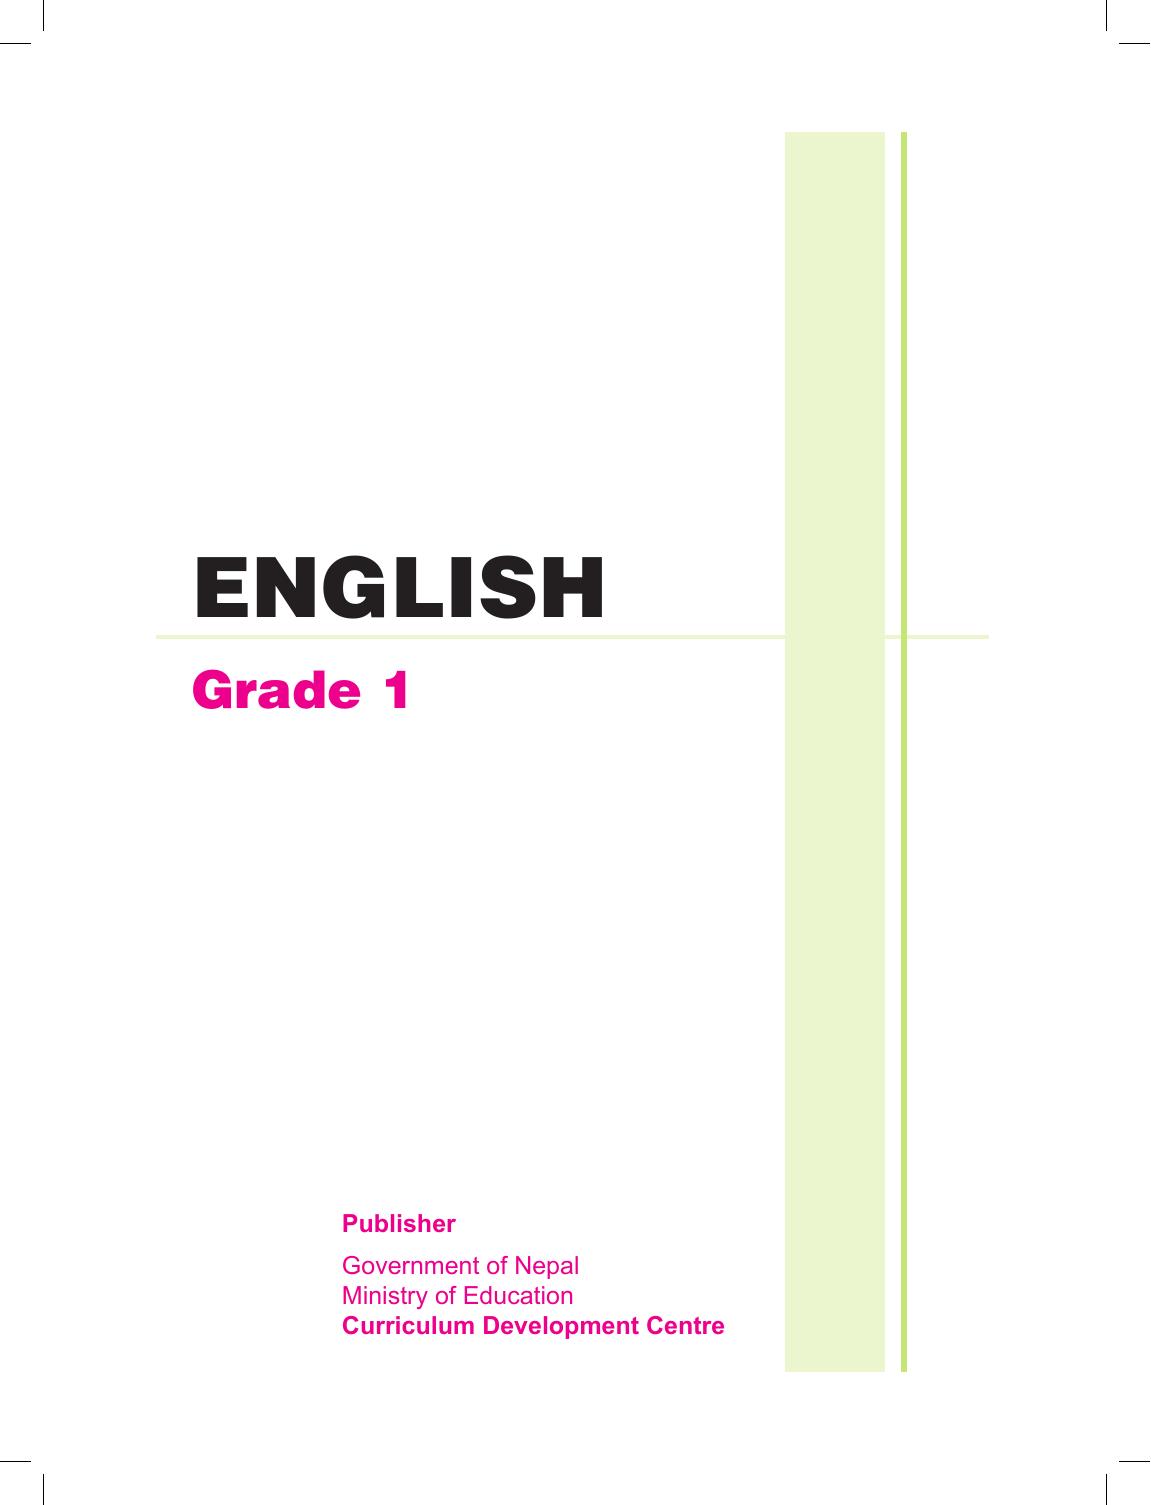 CDC 2016 - English Grade 1